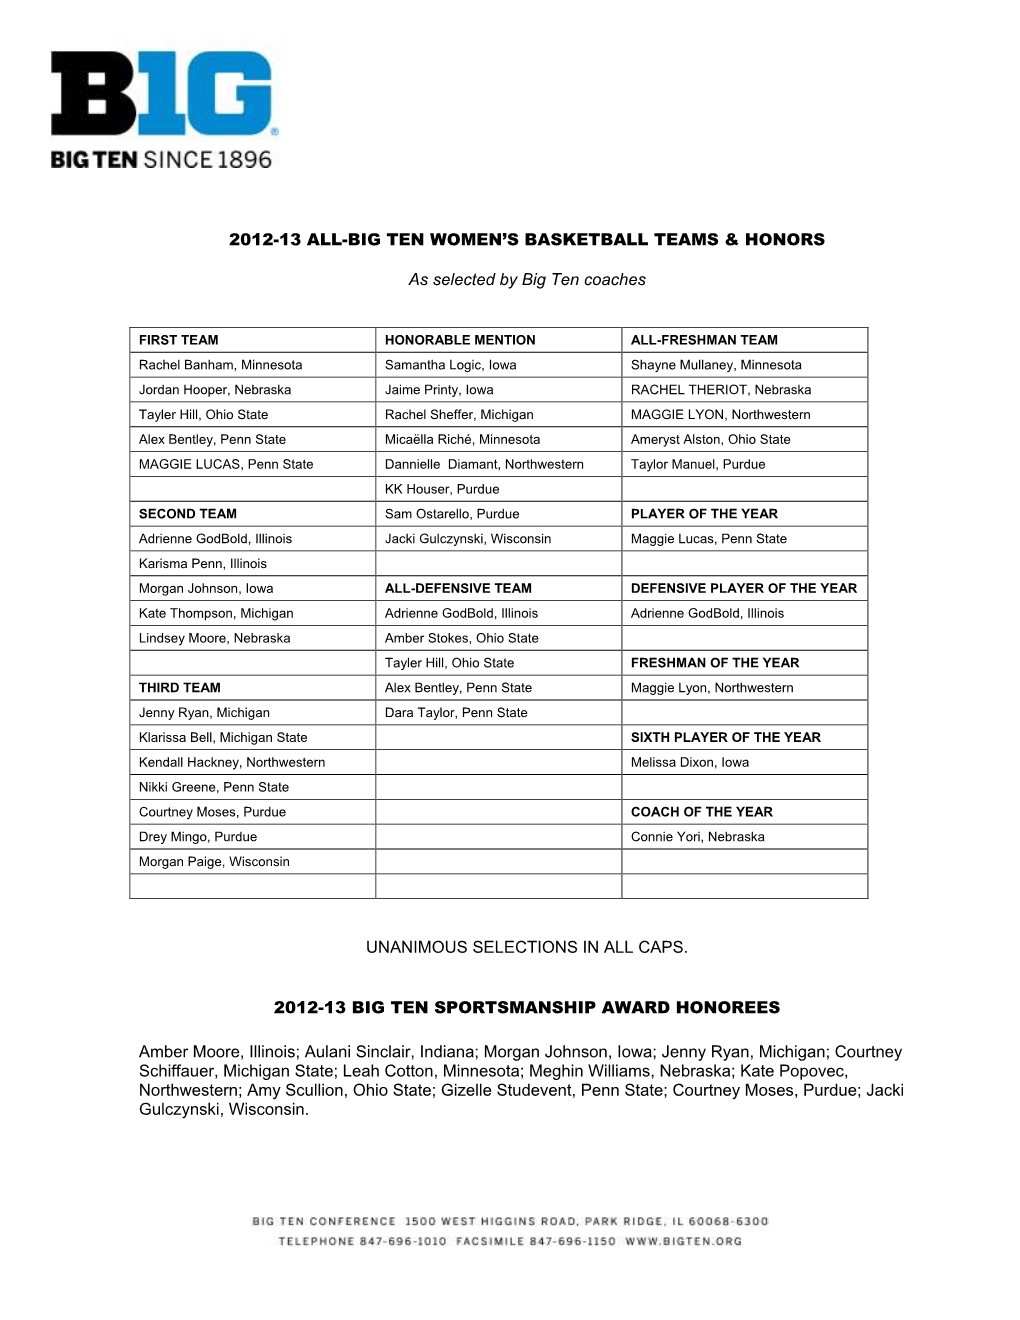 2012-13 All-Big Ten Women's Basketball Teams & Honors